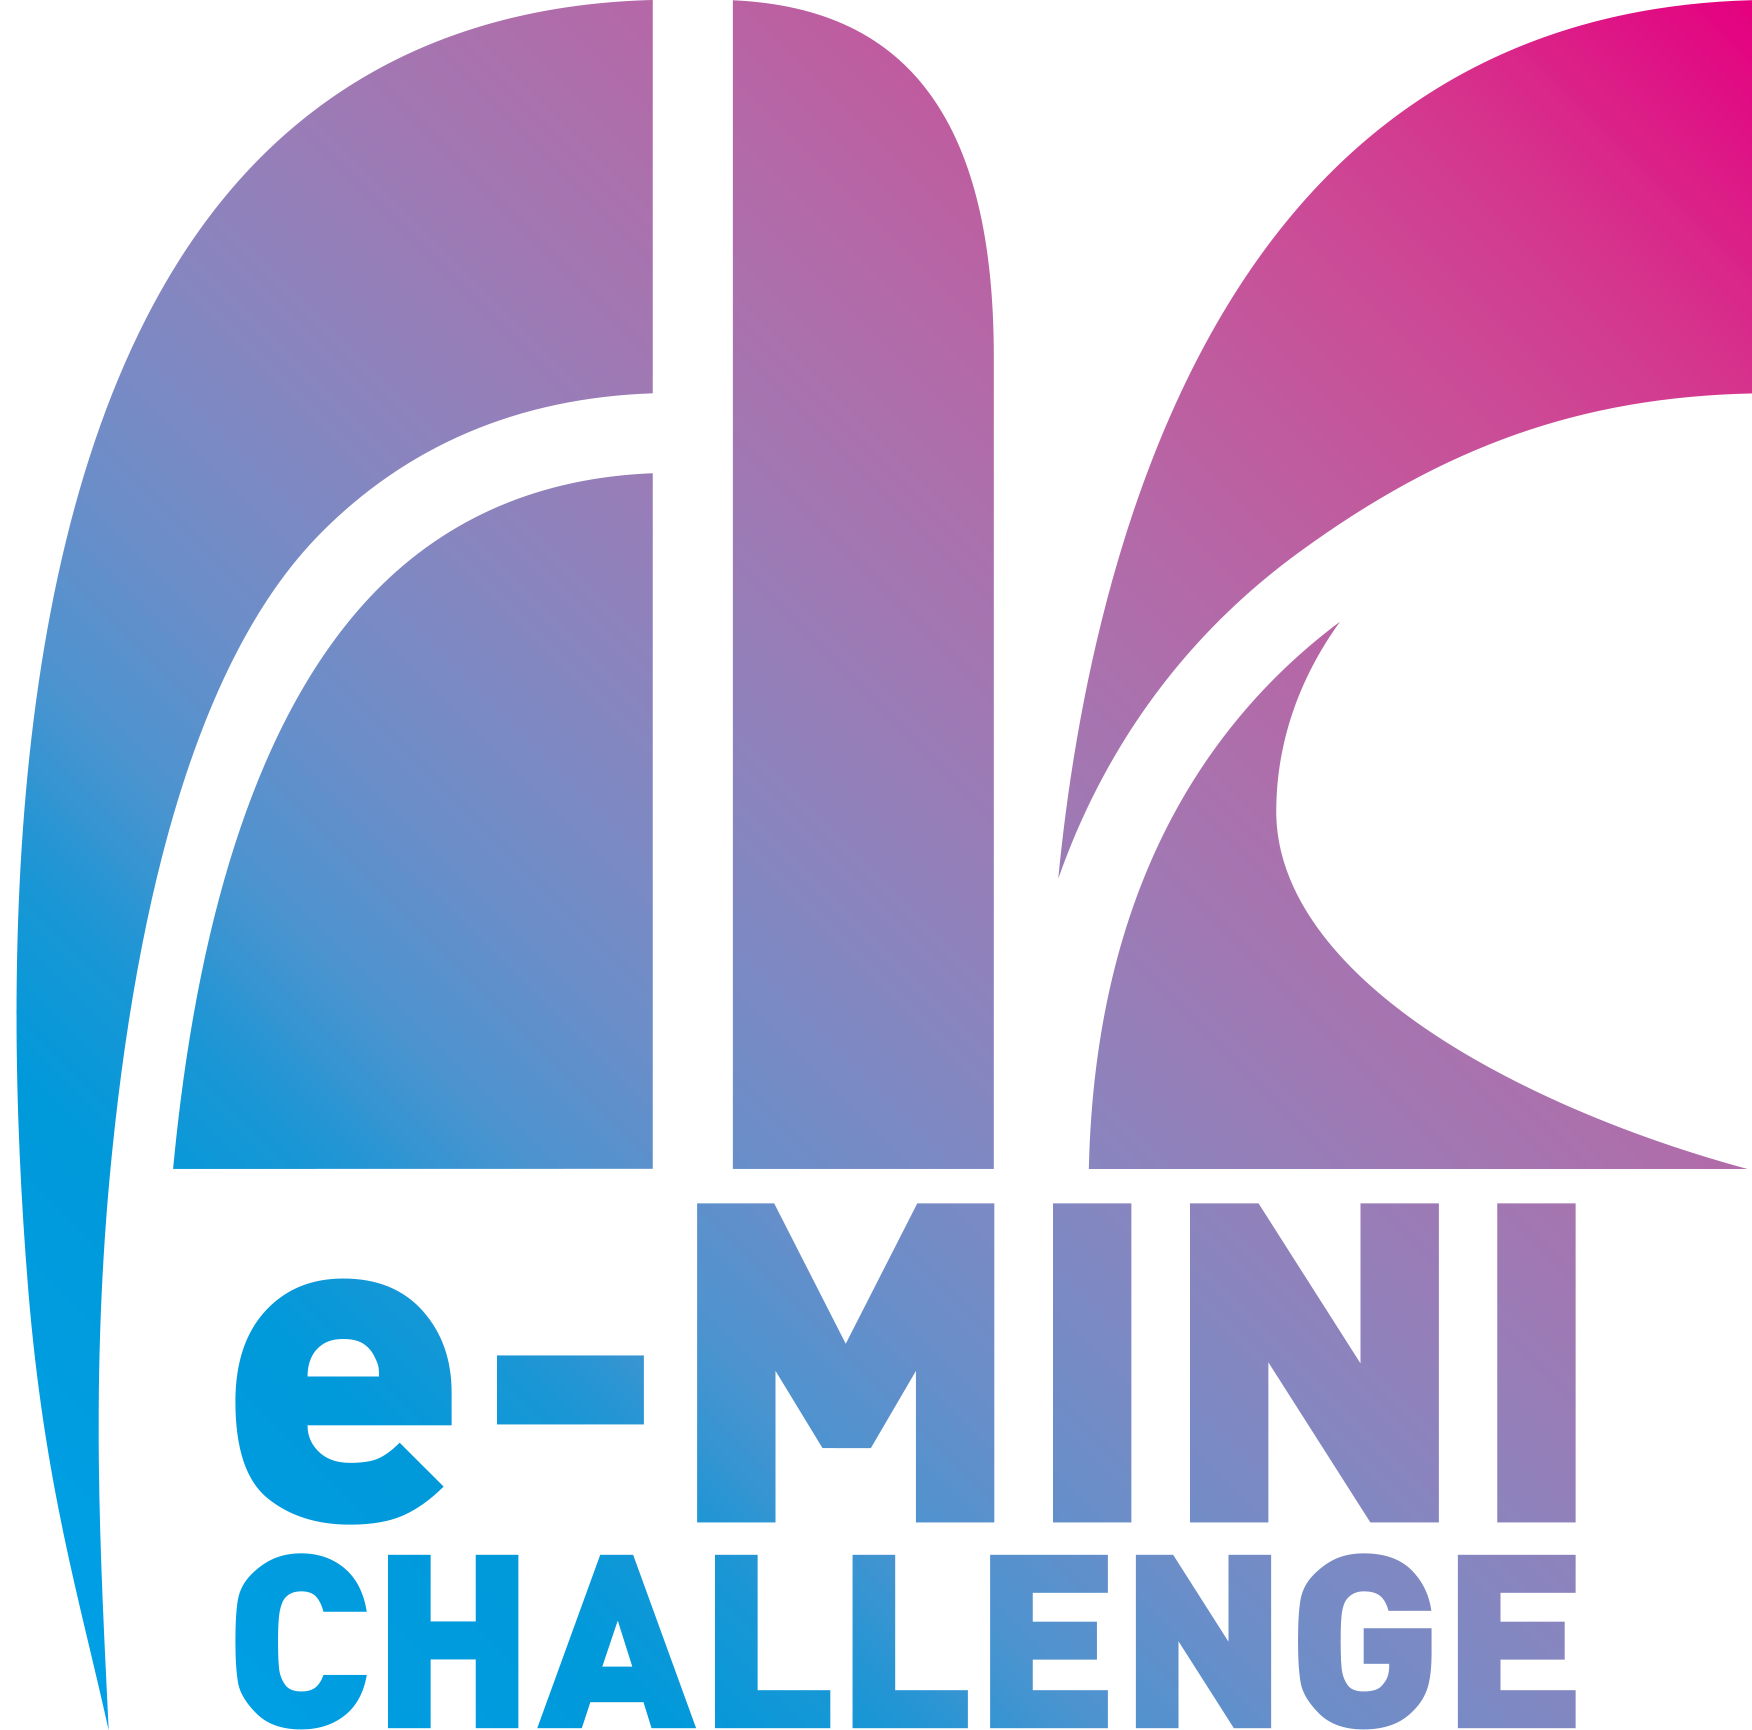 e-MINI CHALLENGE®2022 S2 Rd.4 ポイントランキング公開